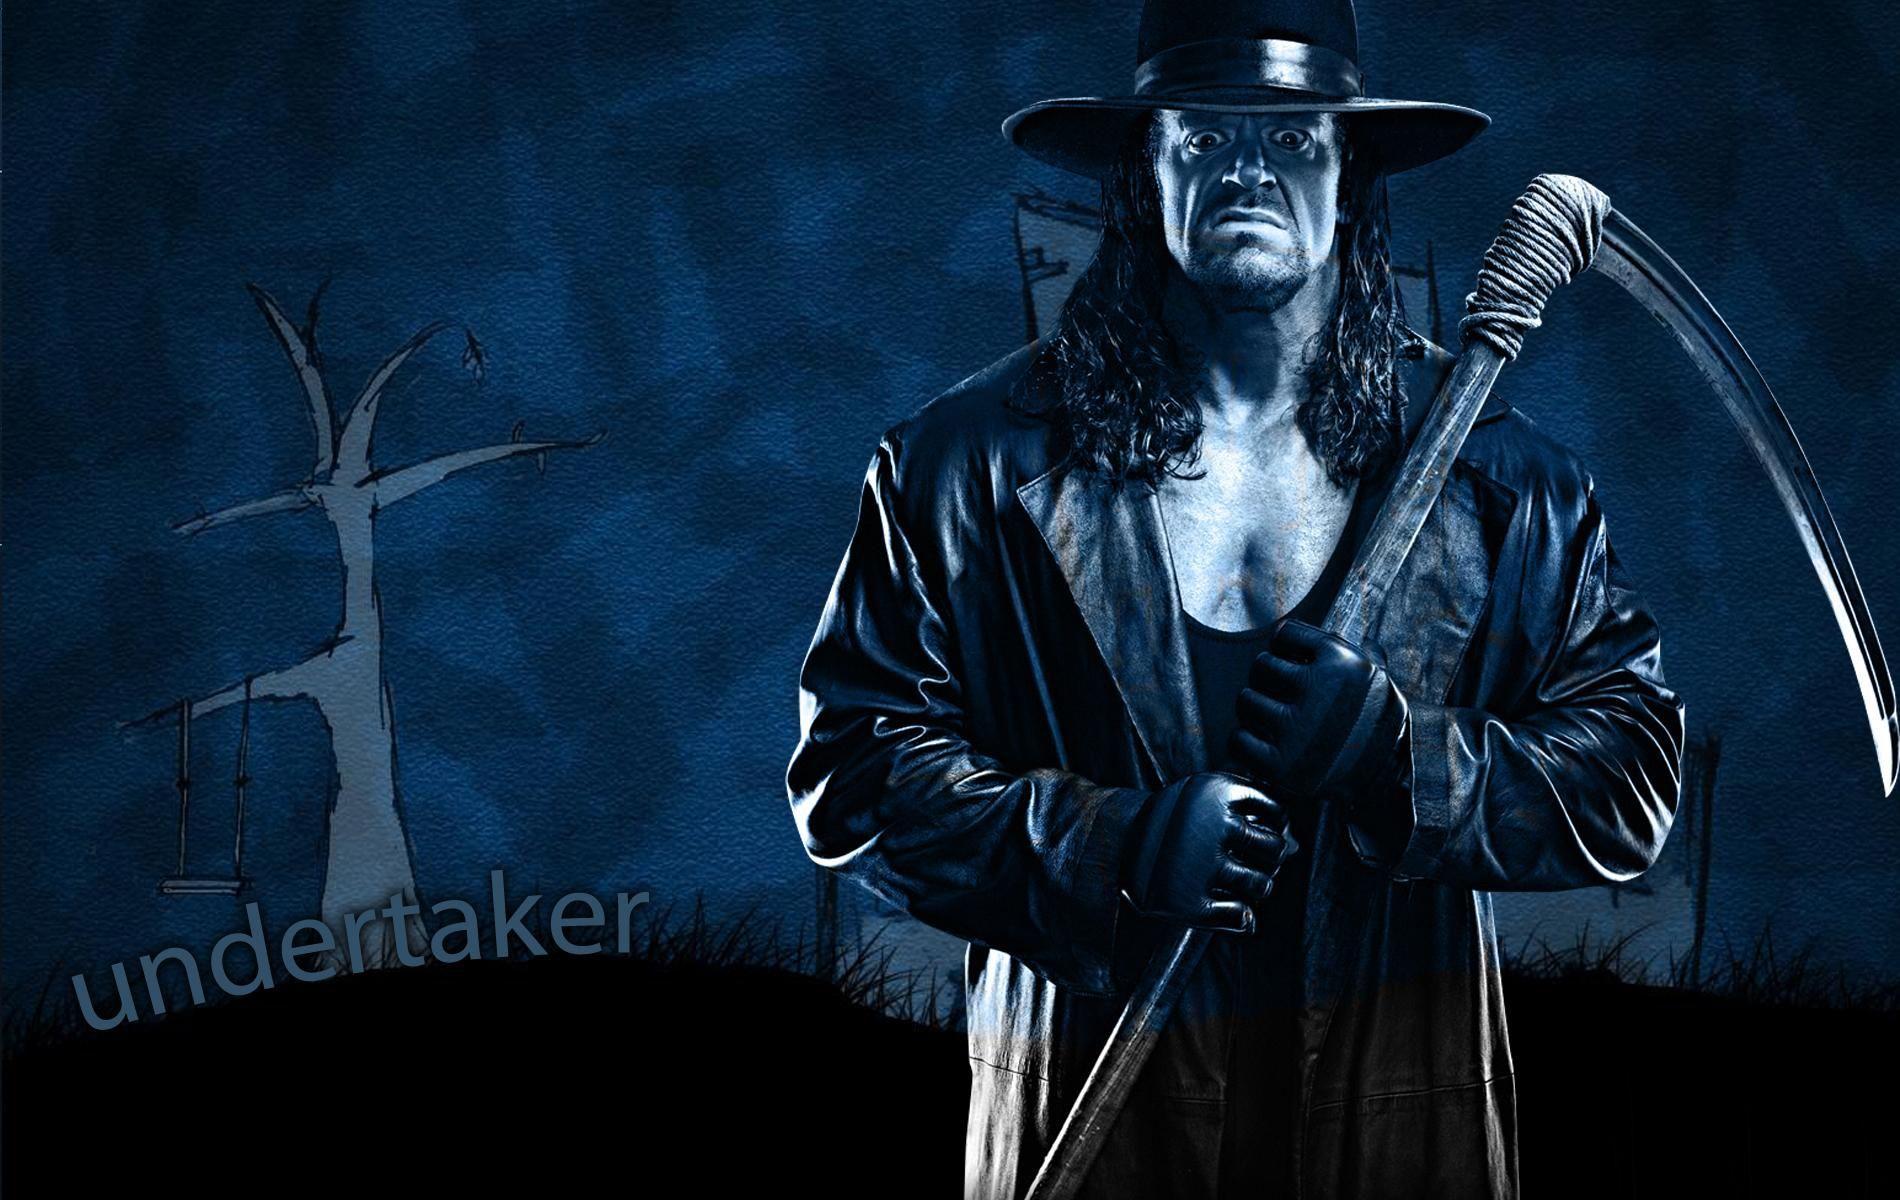 The Undertaker HD Wallpaper HD Wallpaper Free